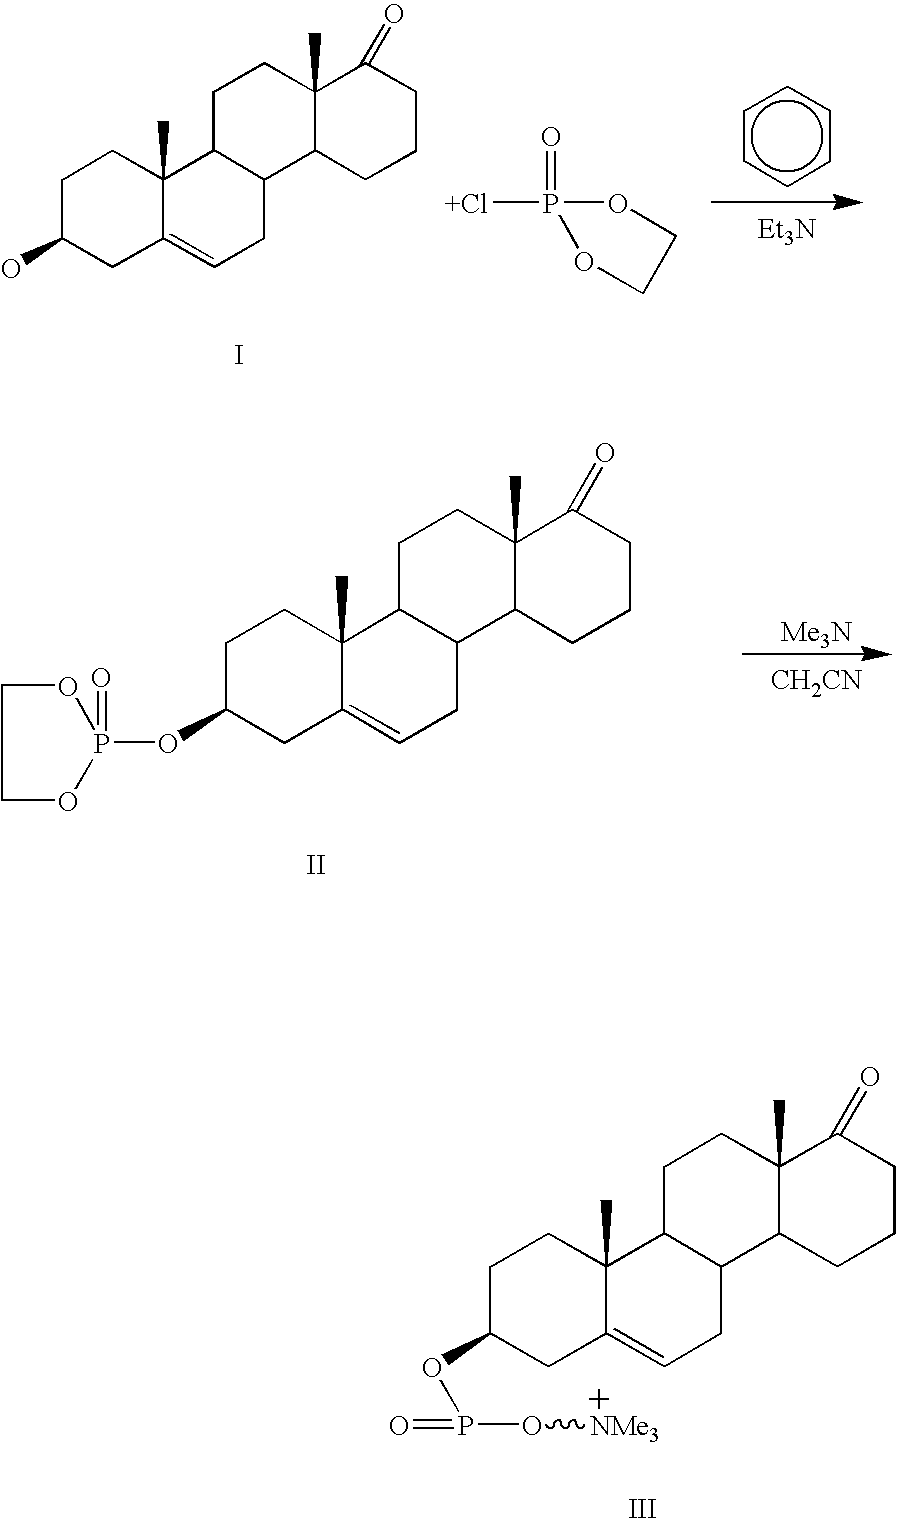 Phosphocholine linked prodrug derivatives